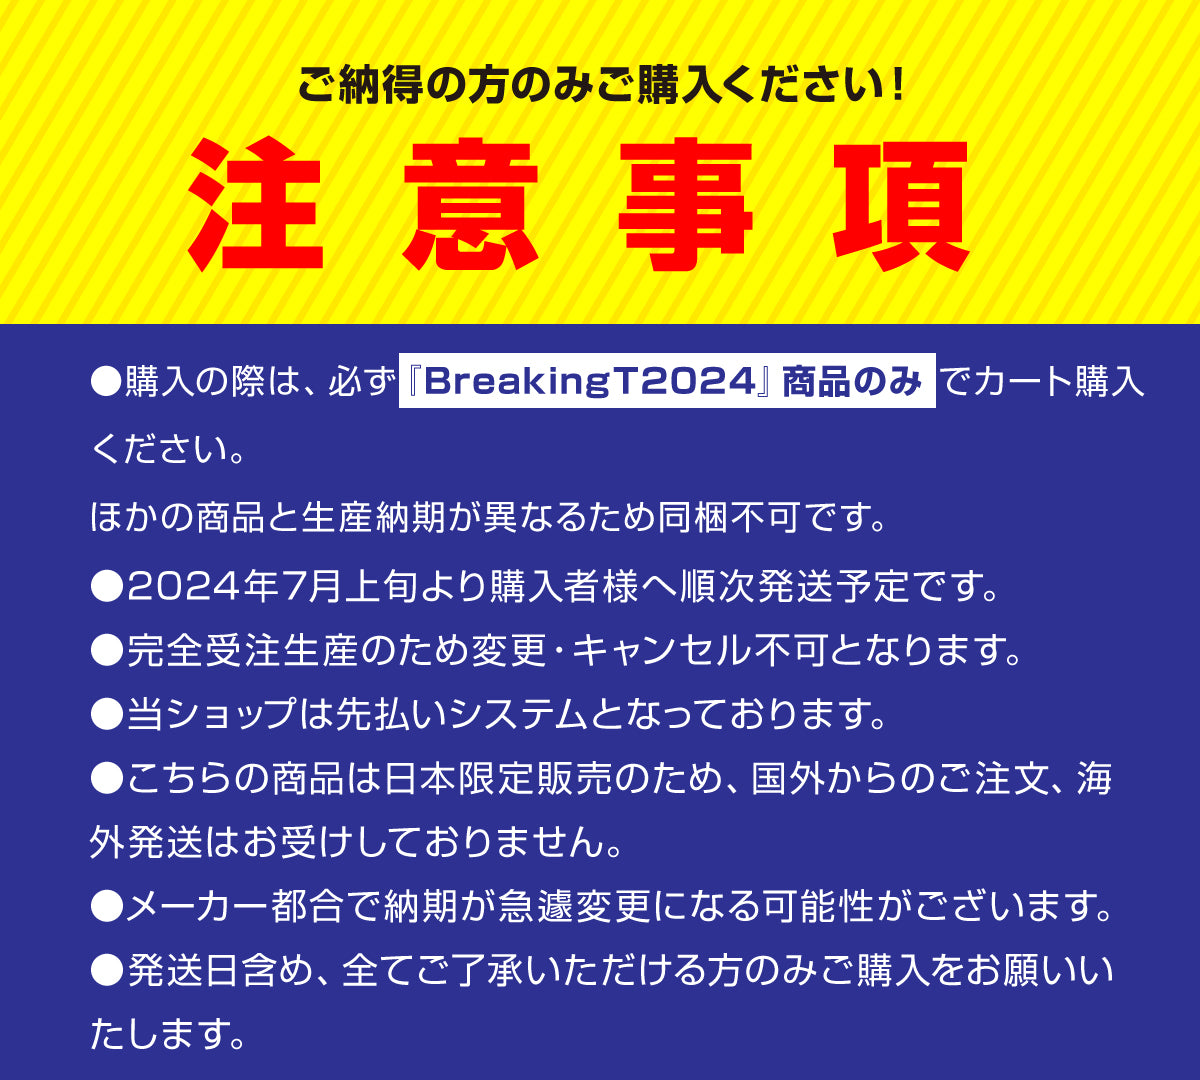 【BreakingT2024】SHOHEI OHTANI「THE MV3」ステッカー